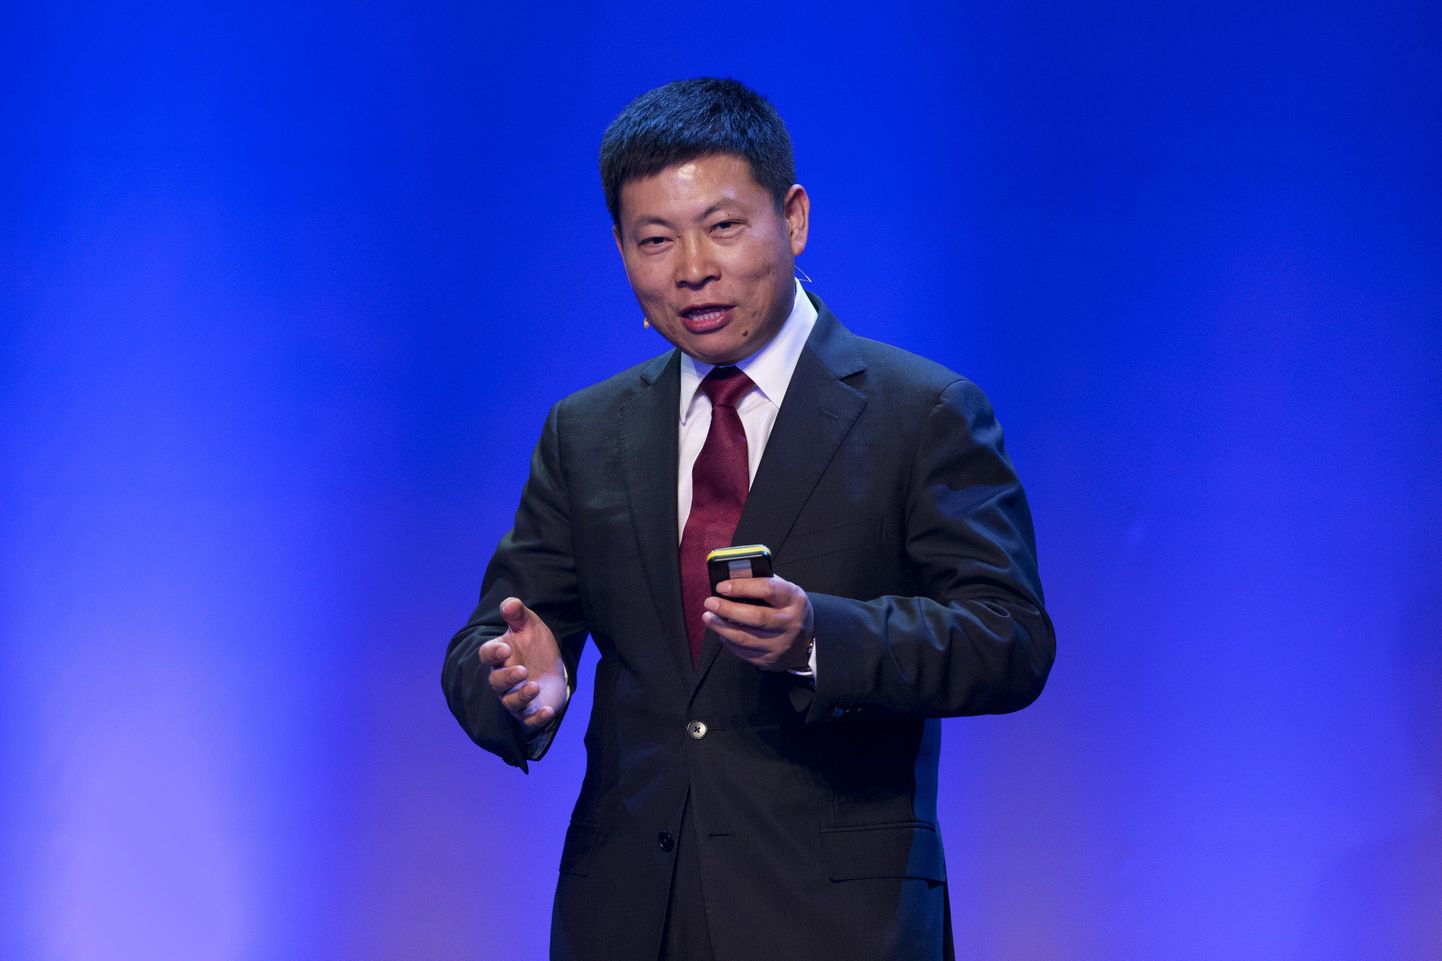 Hiina telekomigrupi tarbijakaupade divisjoni juht Richard Yu